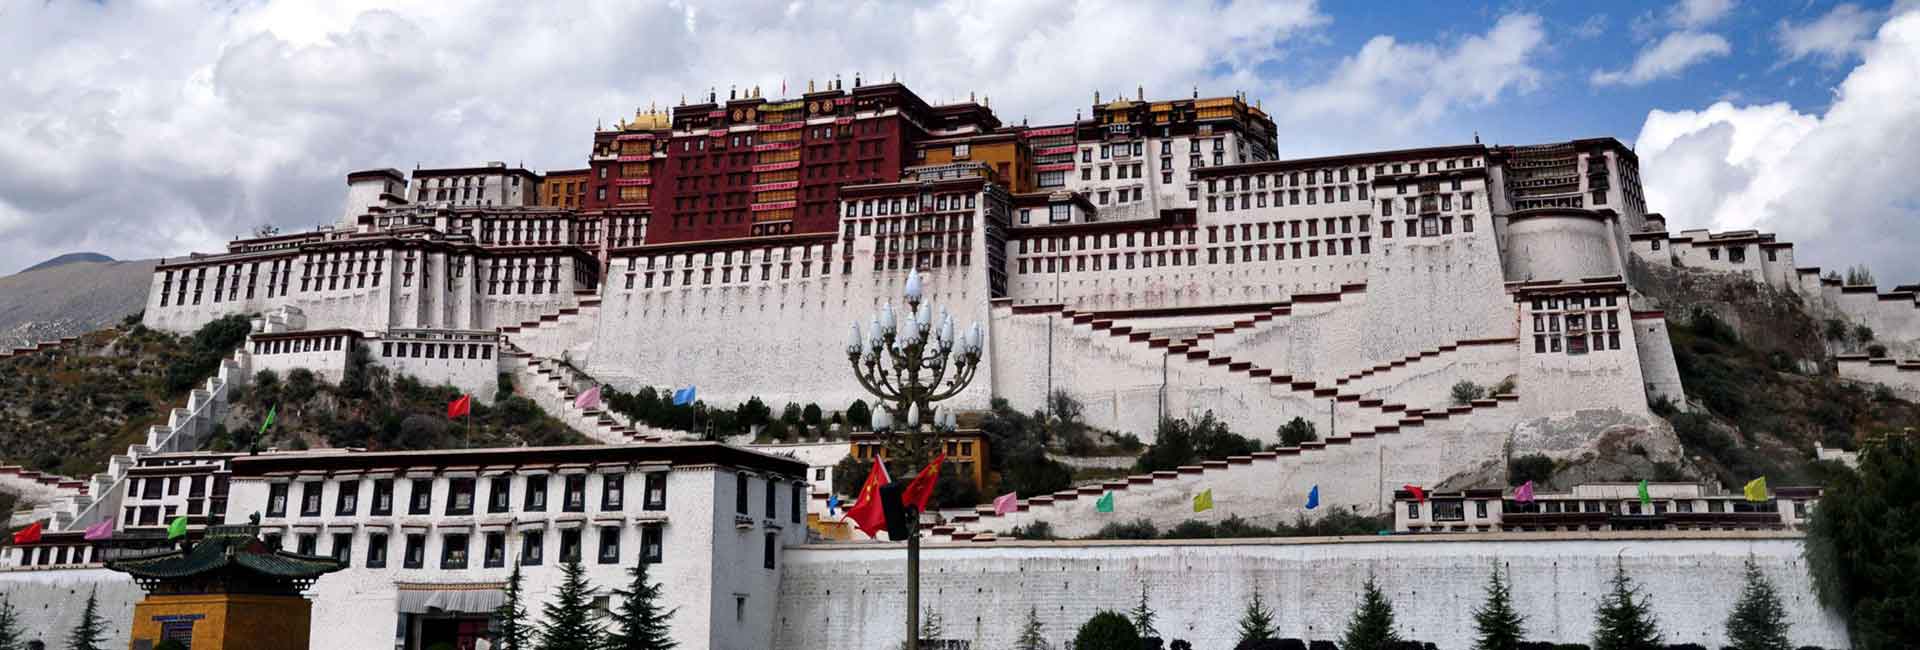 Lhassa - Palais Pótala, Voyage au Tibet